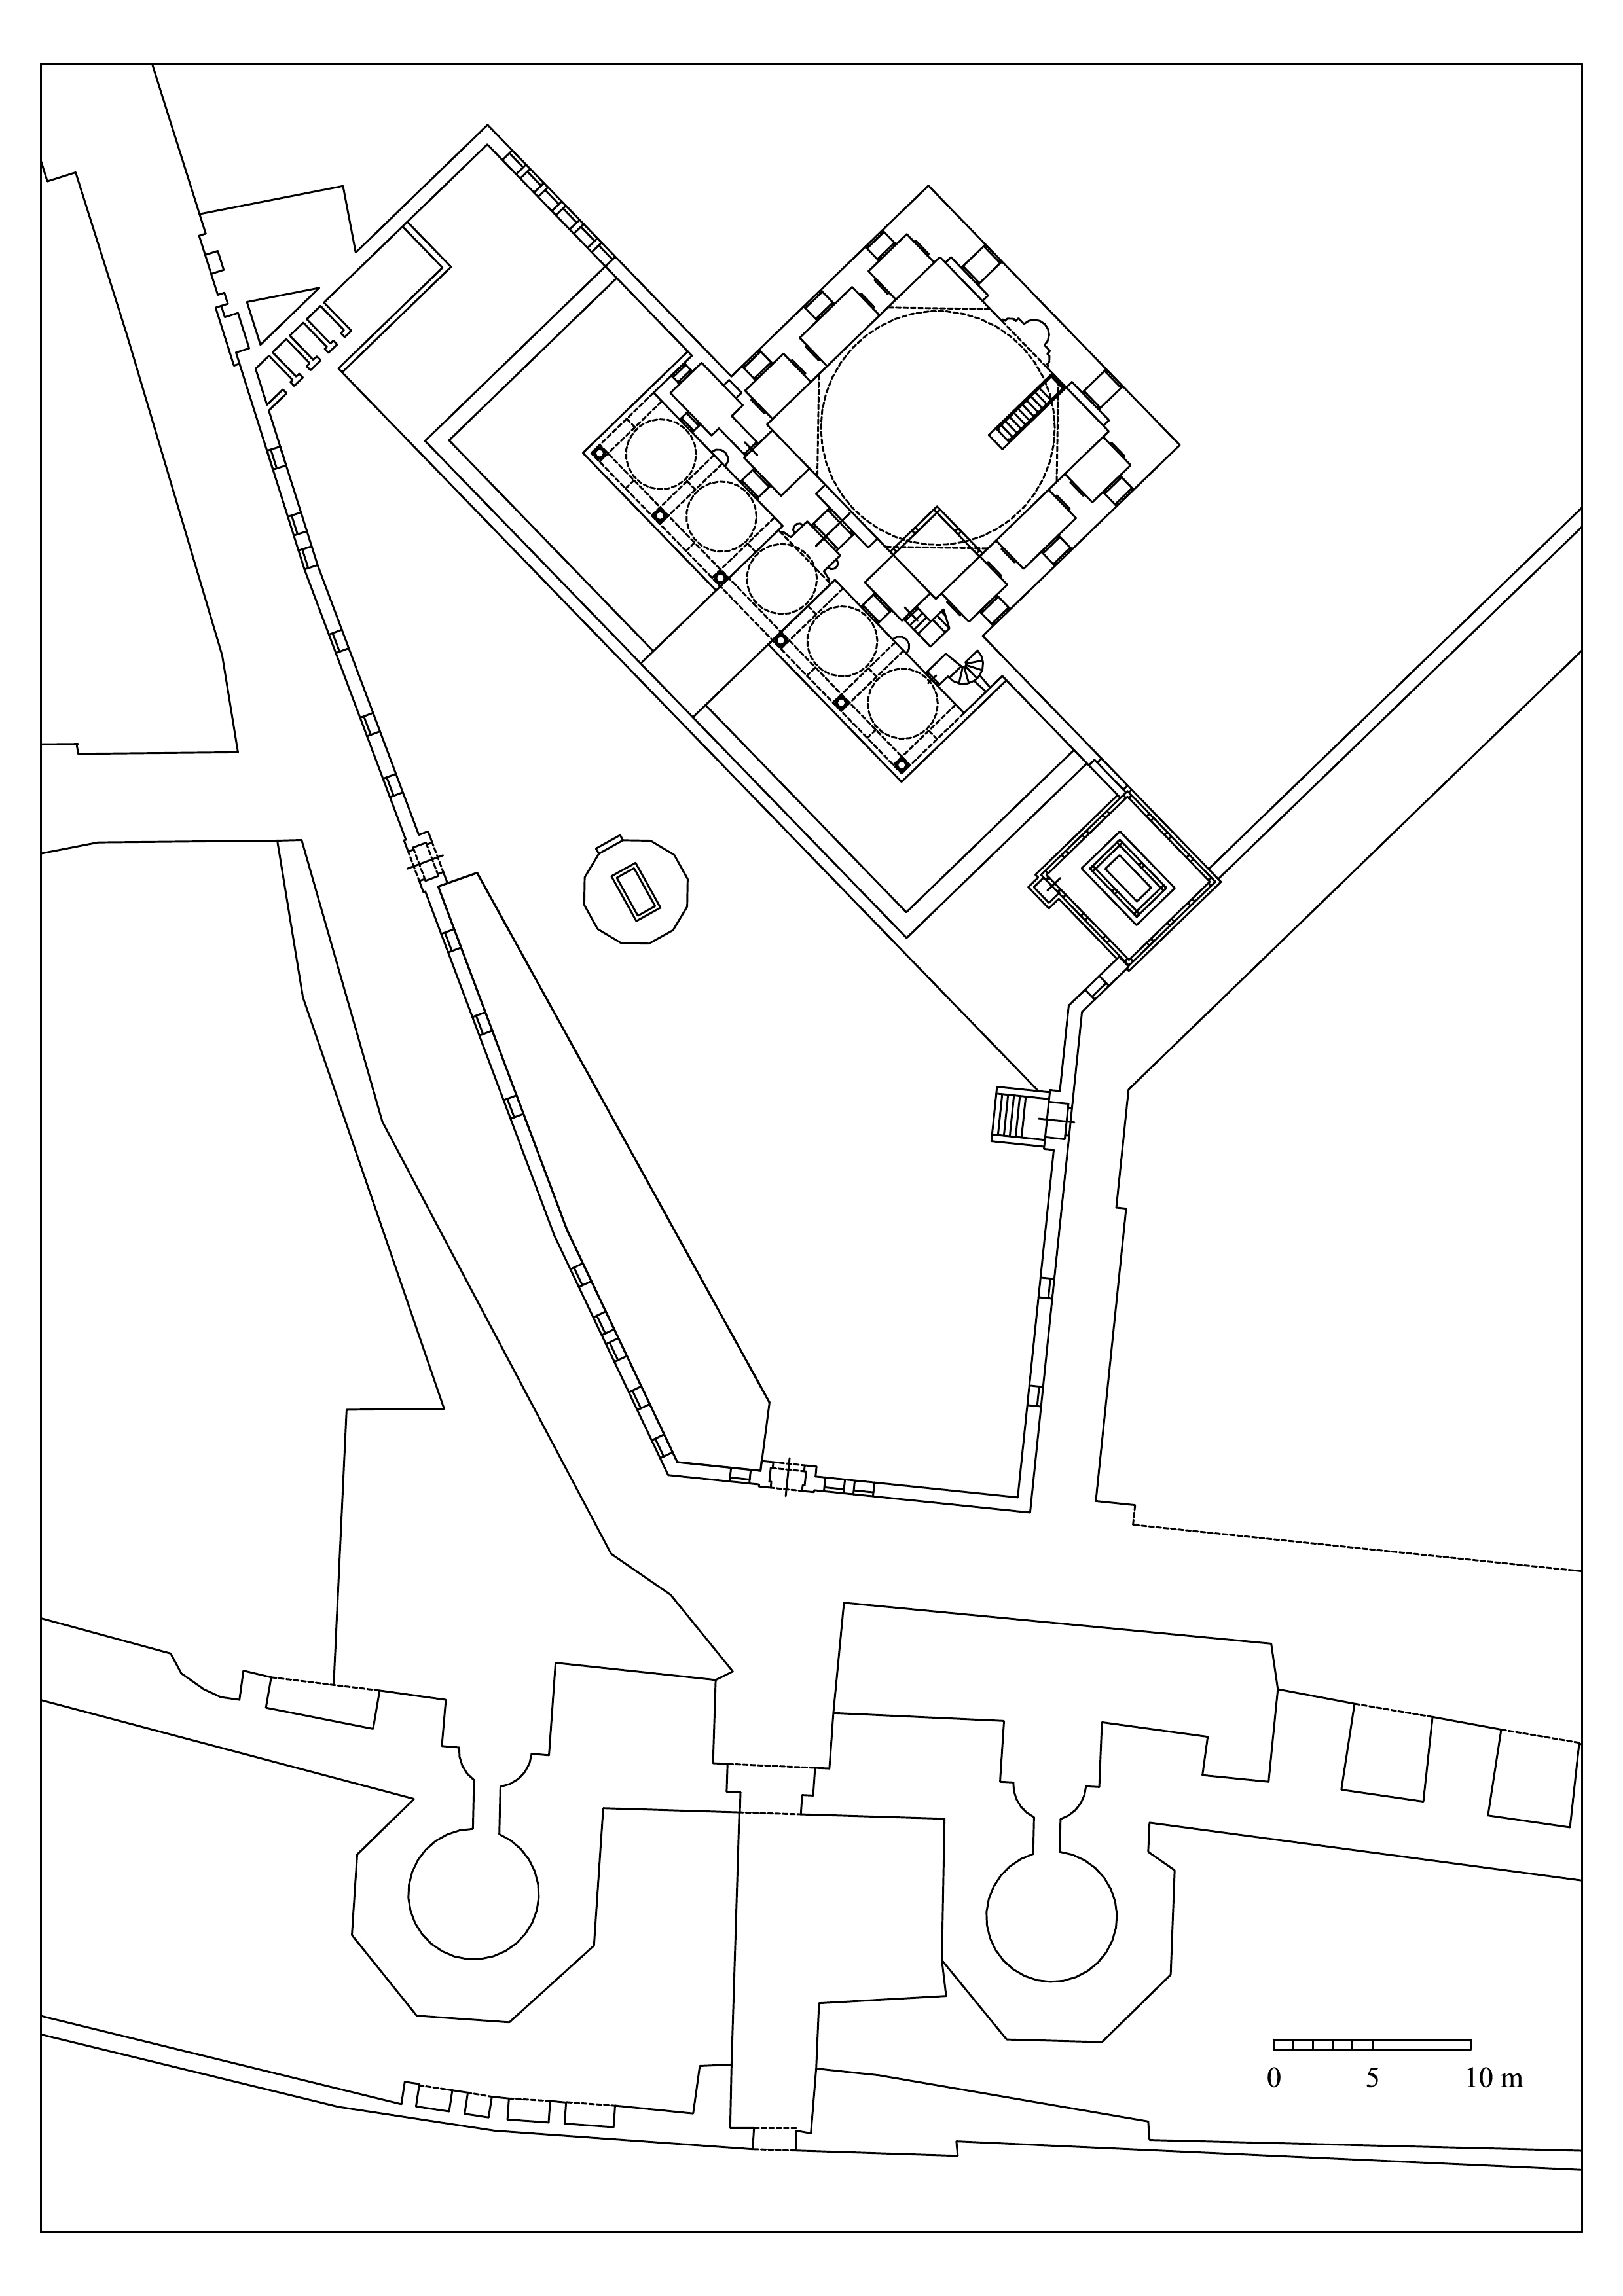 Floor plan of Hadim Ibrahim Pasa Mosque